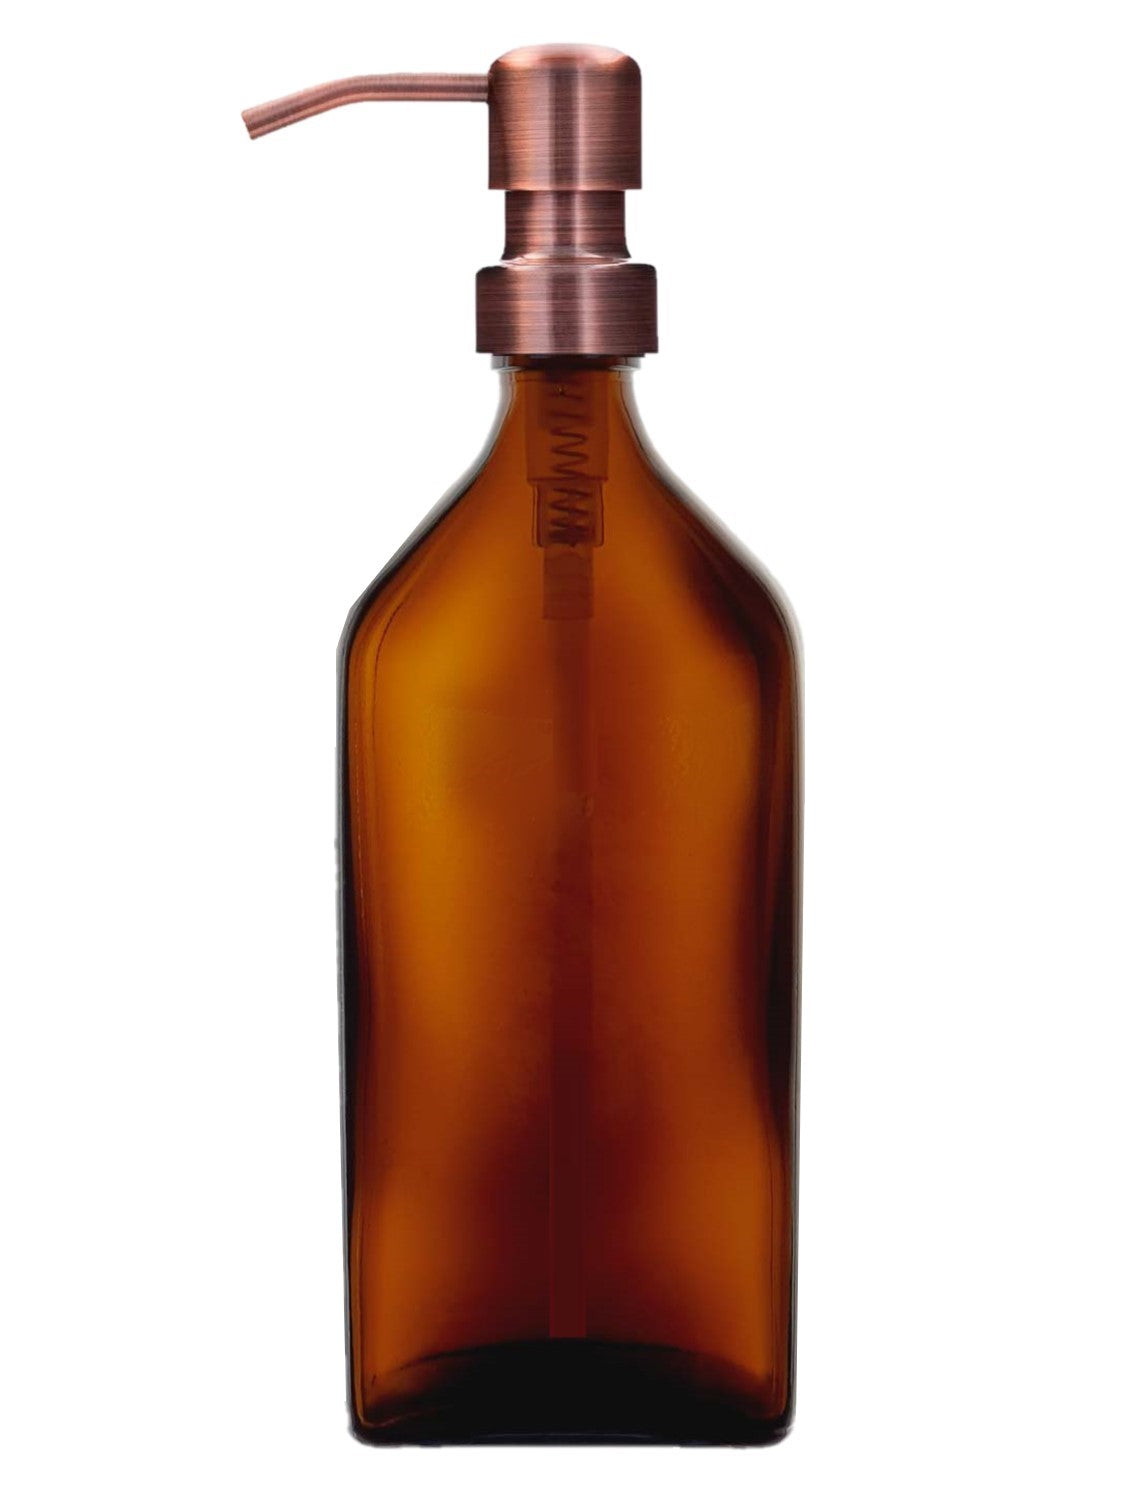 500ml Rectangular Amber Glass Soap Dispenser Bottles with Copper Style Metal Pump